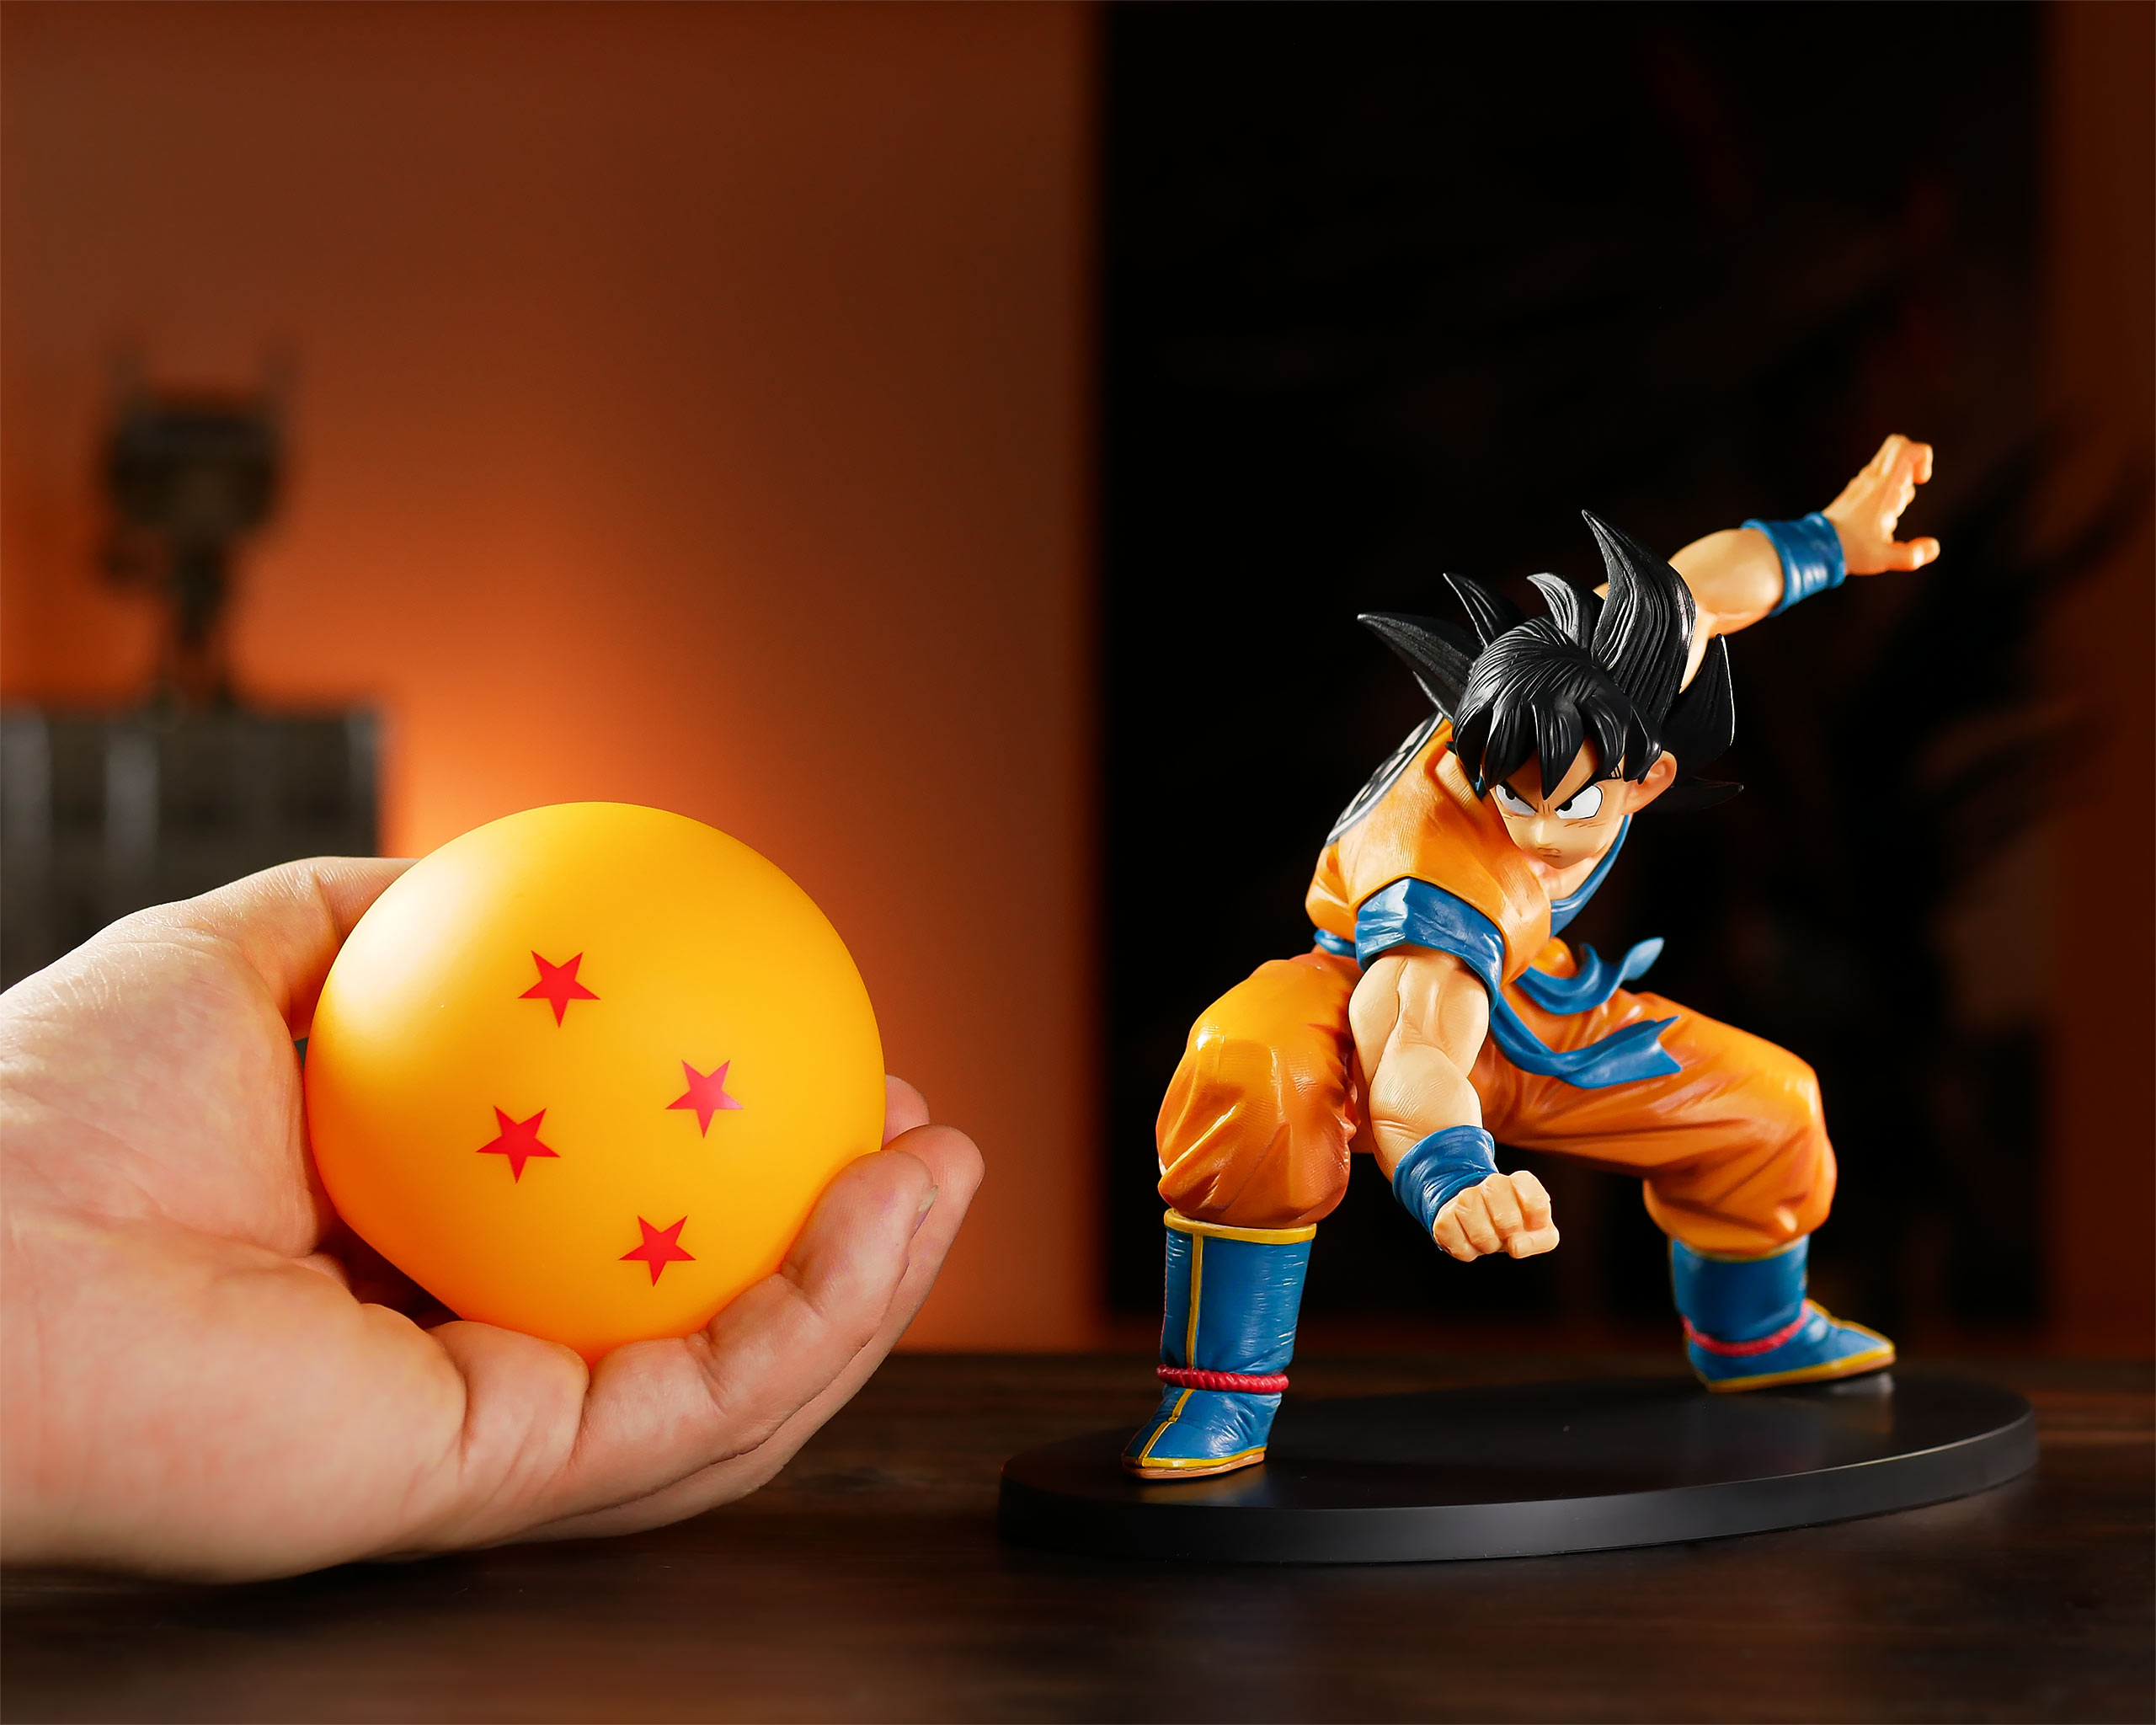 Dragon Ball Super - Son Goku Figure 15.7 cm